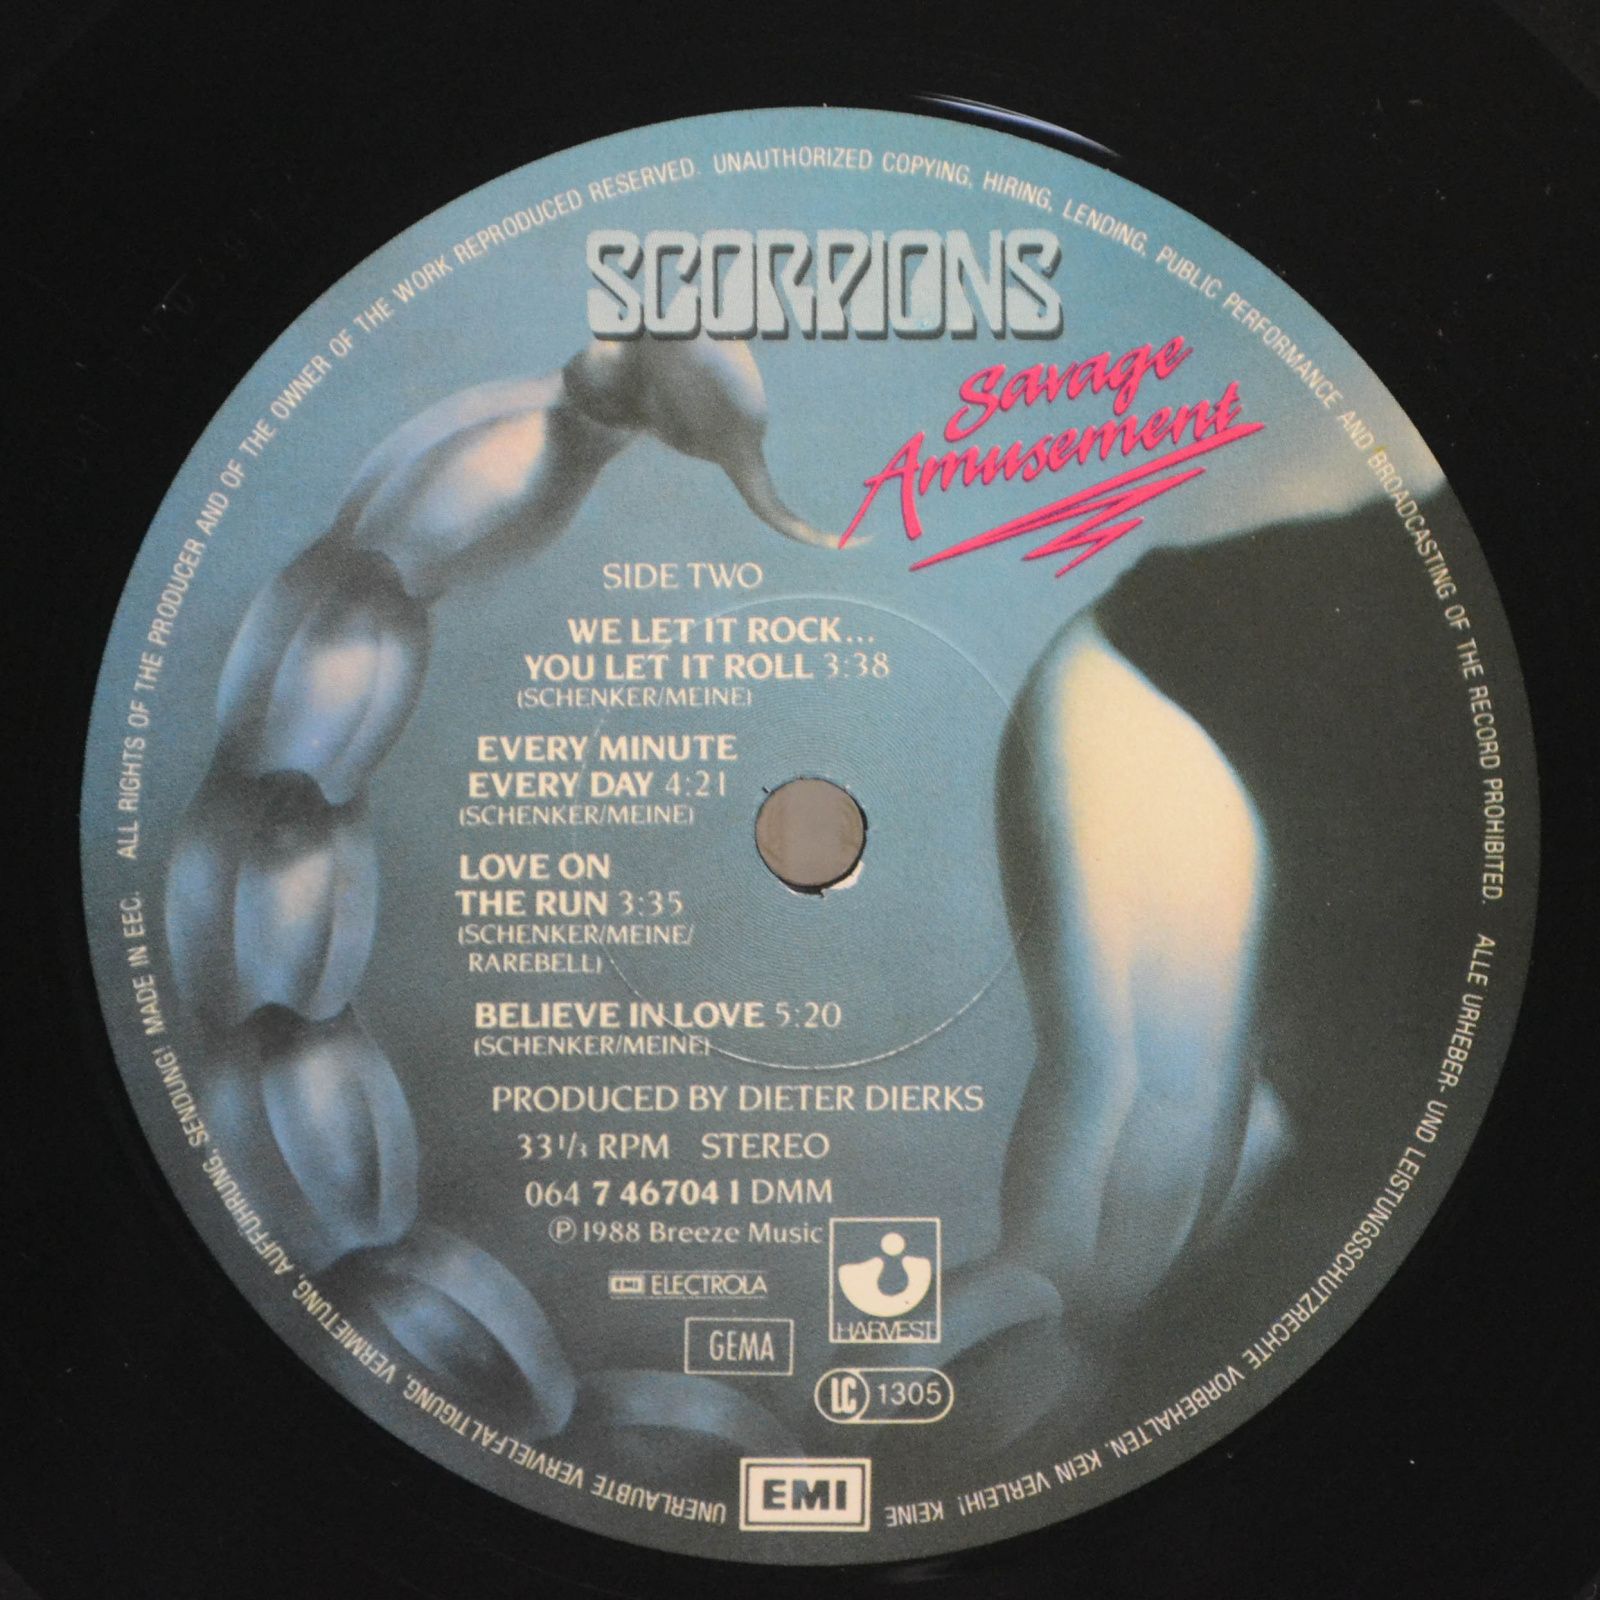 Scorpions — Savage Amusement, 1988